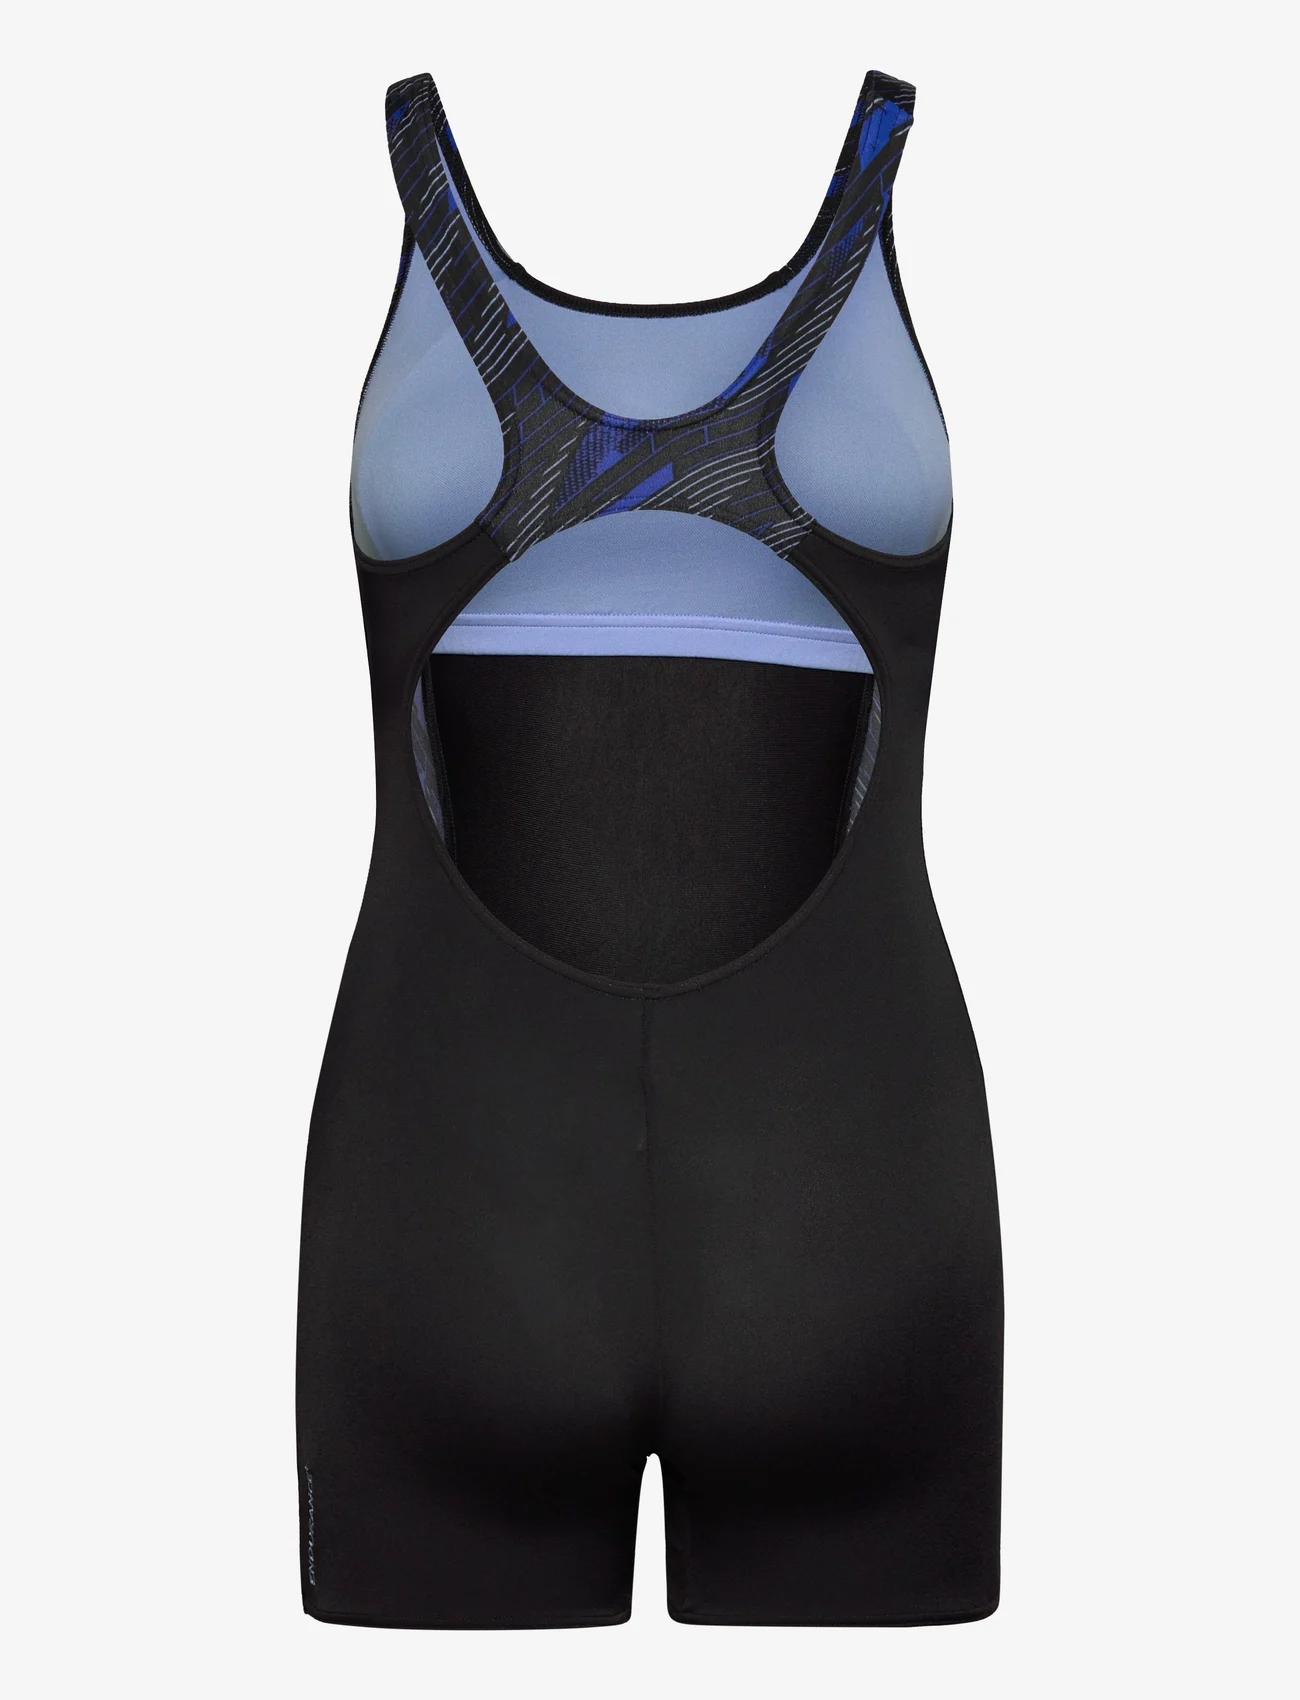 Speedo - Womens HyperBoom Splice Legsuit - peldkostīmi - black/blue - 1